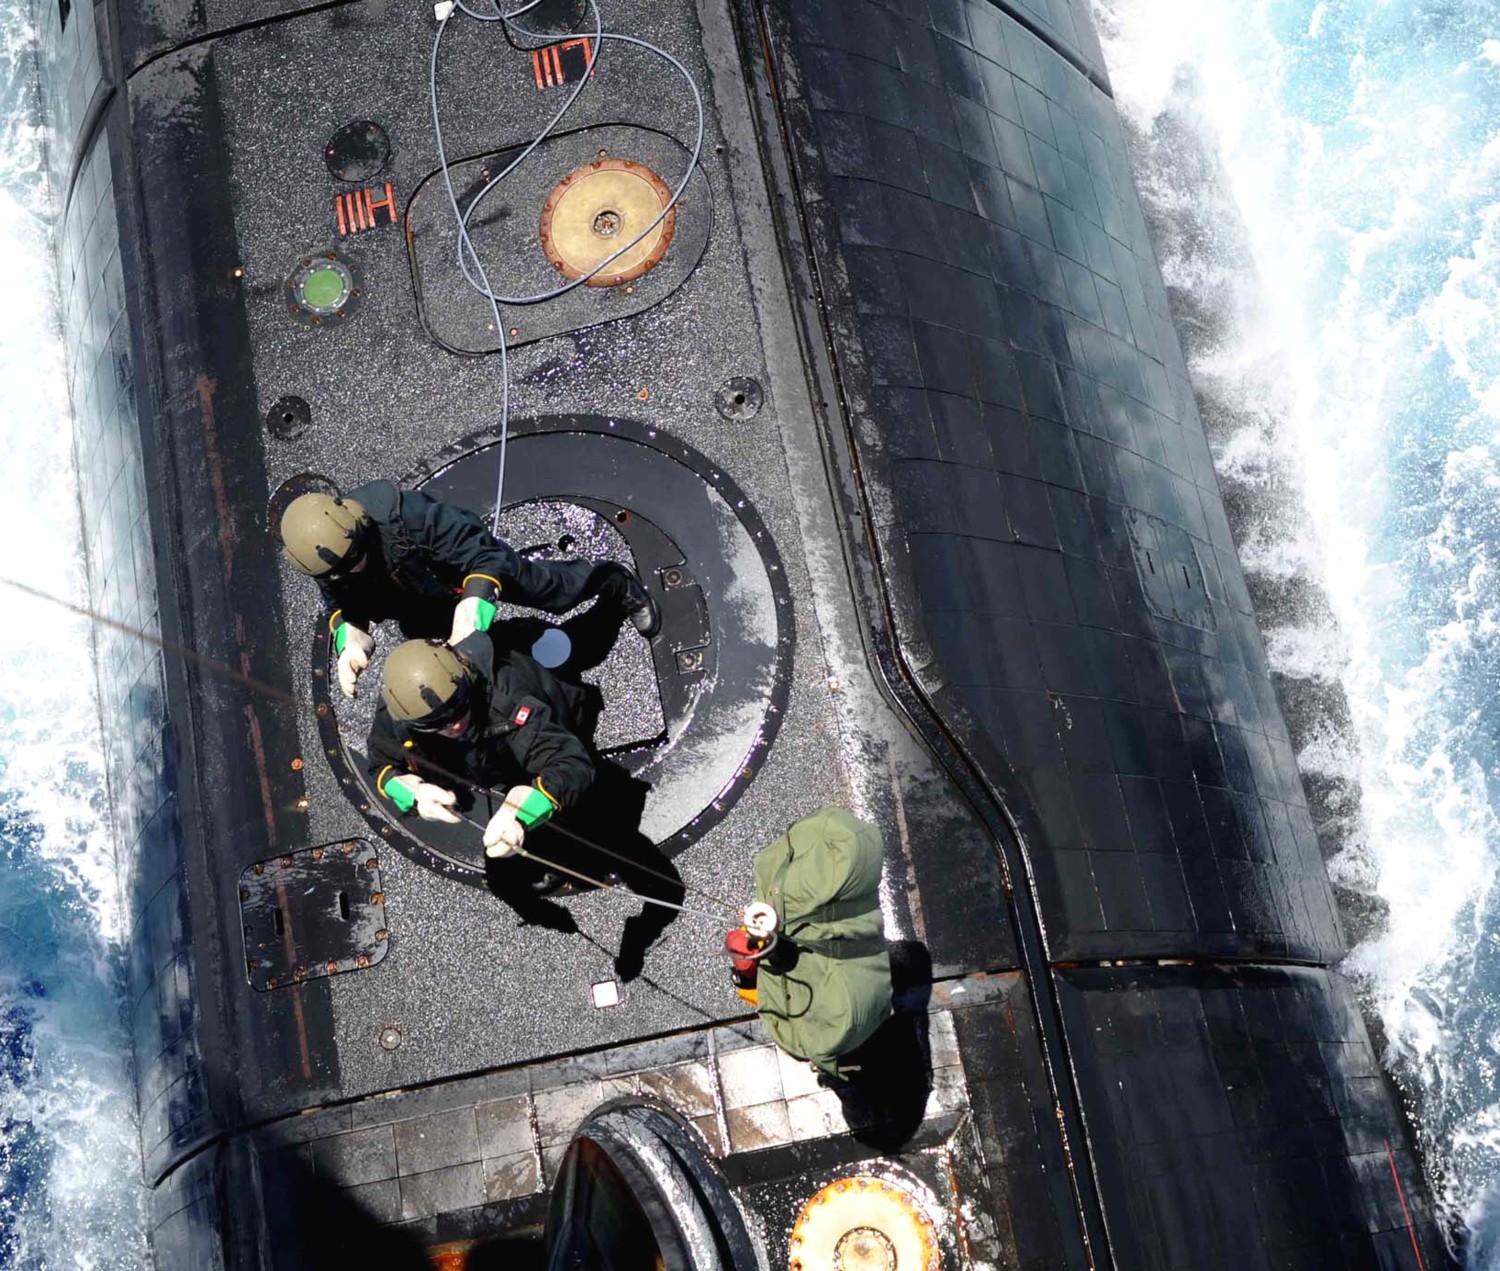 ssk-876 hmcs victoria upholder class attack submarine hunter killer ncsm royal canadian navy 12